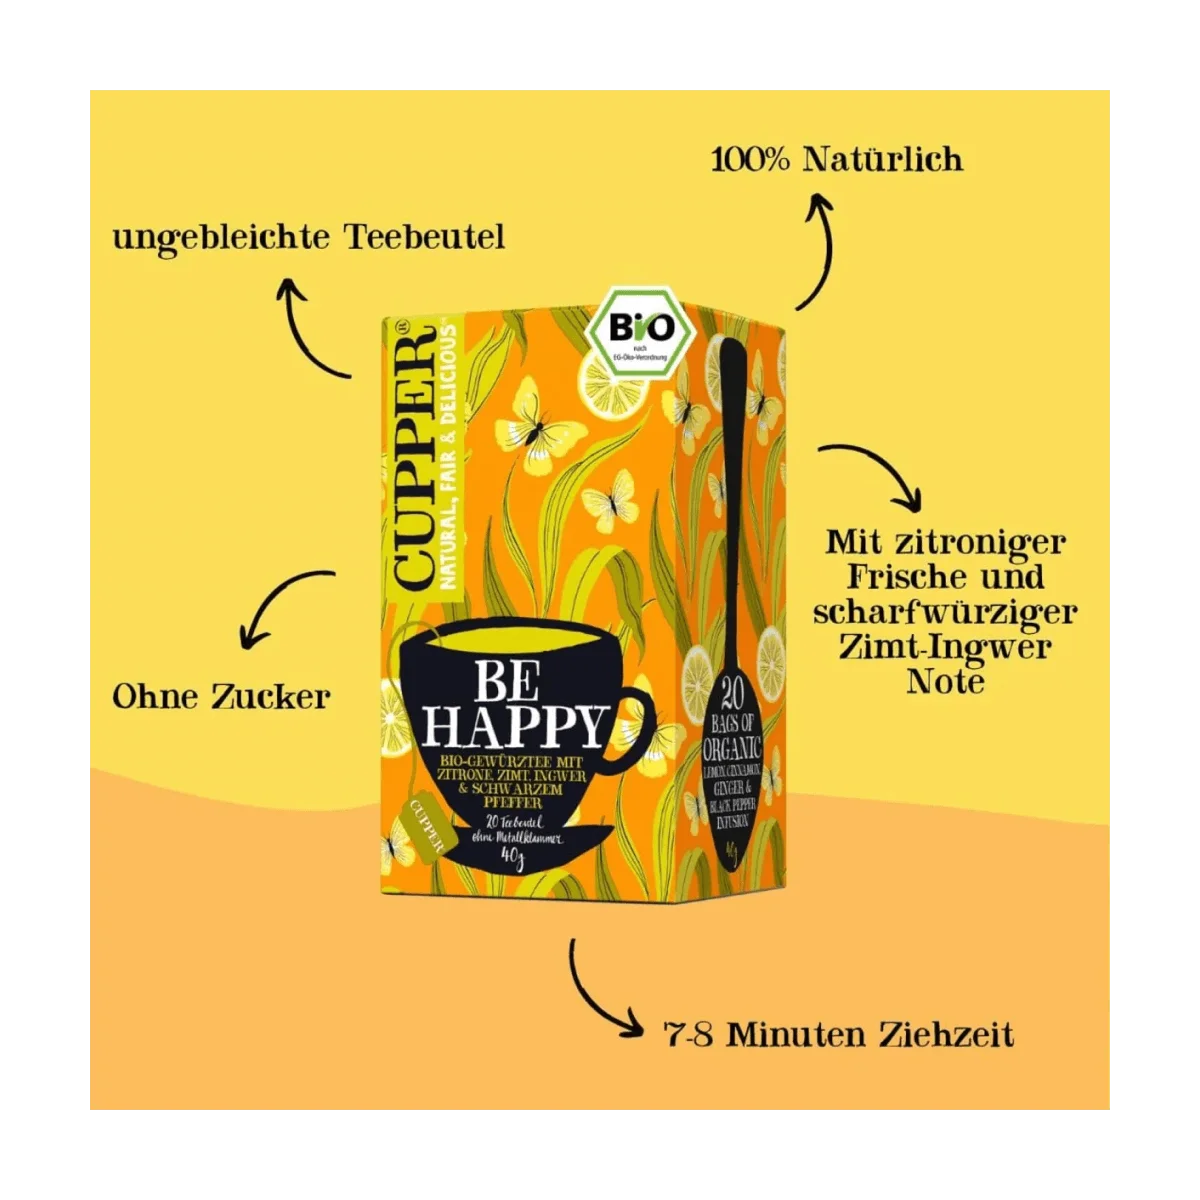 Cupper Gewürztee "Be Happy" mit Zitrone, Zimt, Ingwer, schwarzer Pfeffer (20 Beutel), 40 g